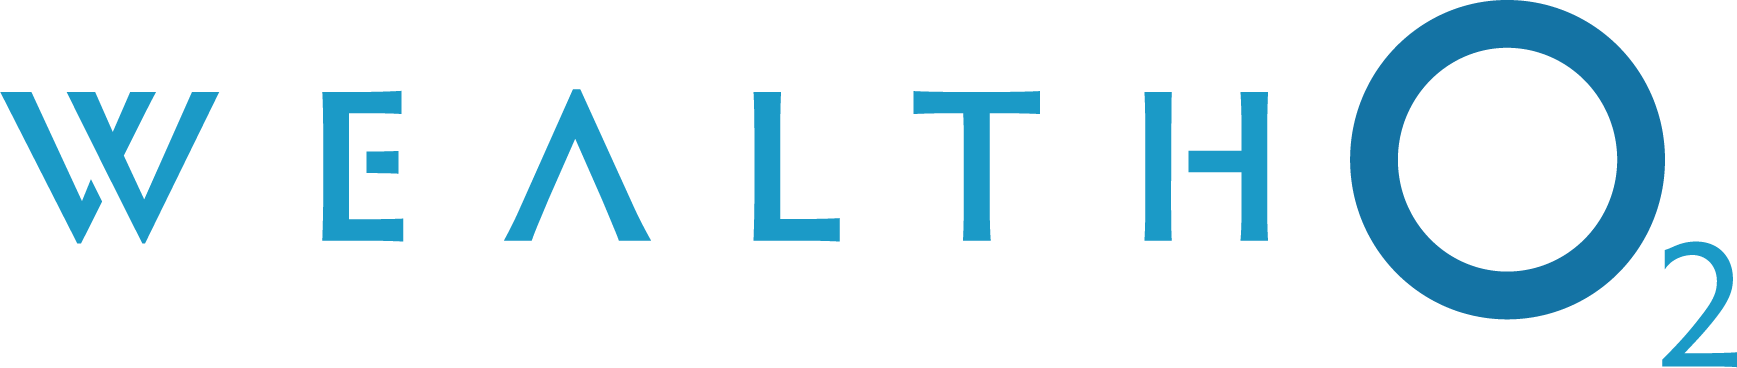 _logo